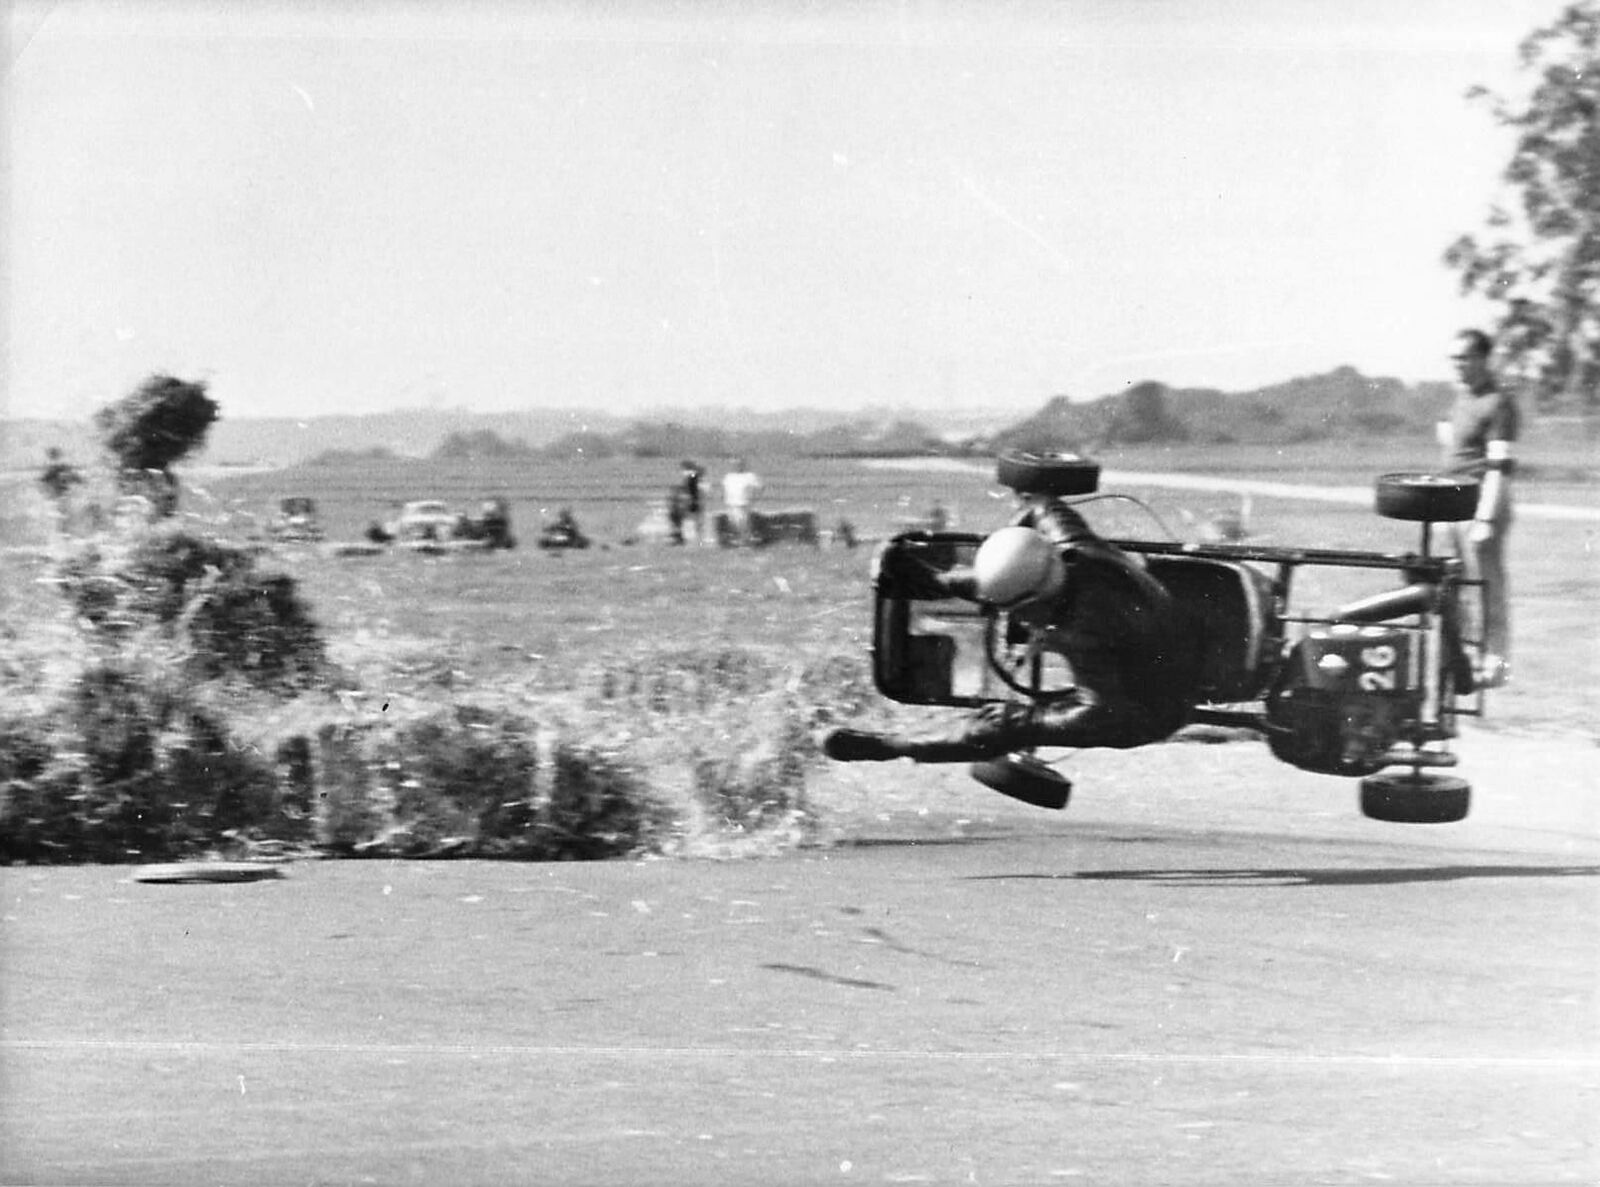 1965 Press Photo British Kart Racing Championships William Carney Crashes in Hay